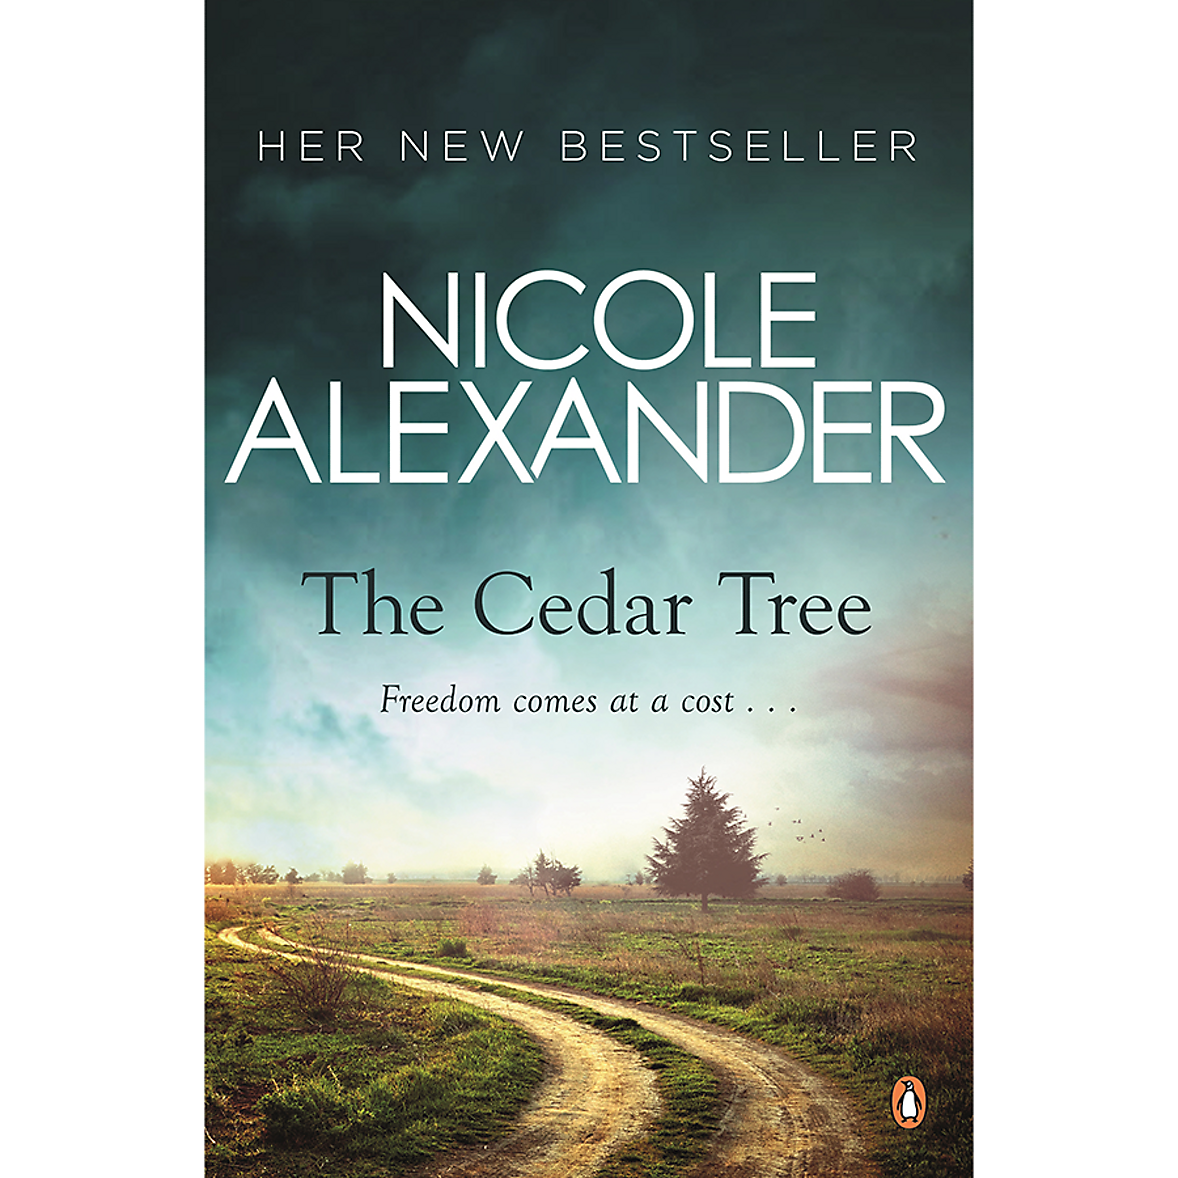 The Cedar Tree by Nicole Alexander